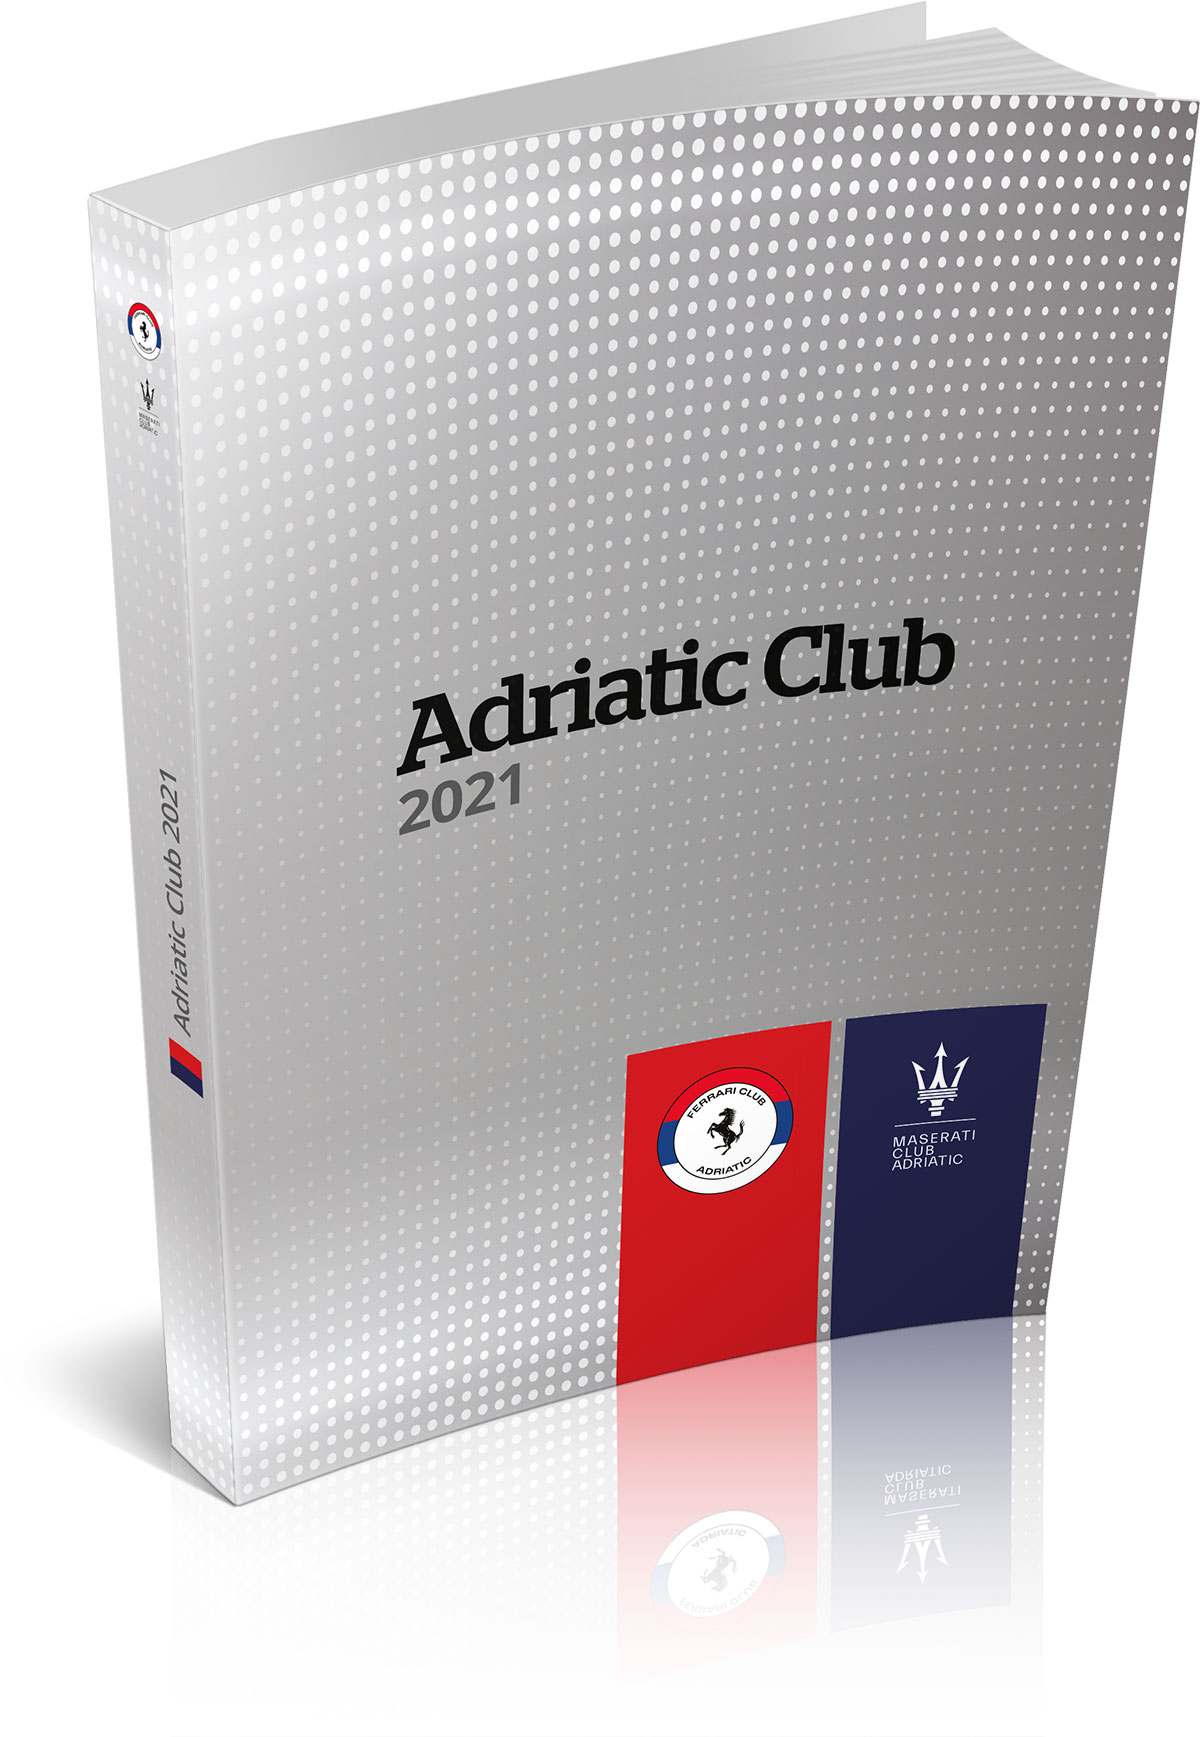 Book cover design Adriatic club 2021